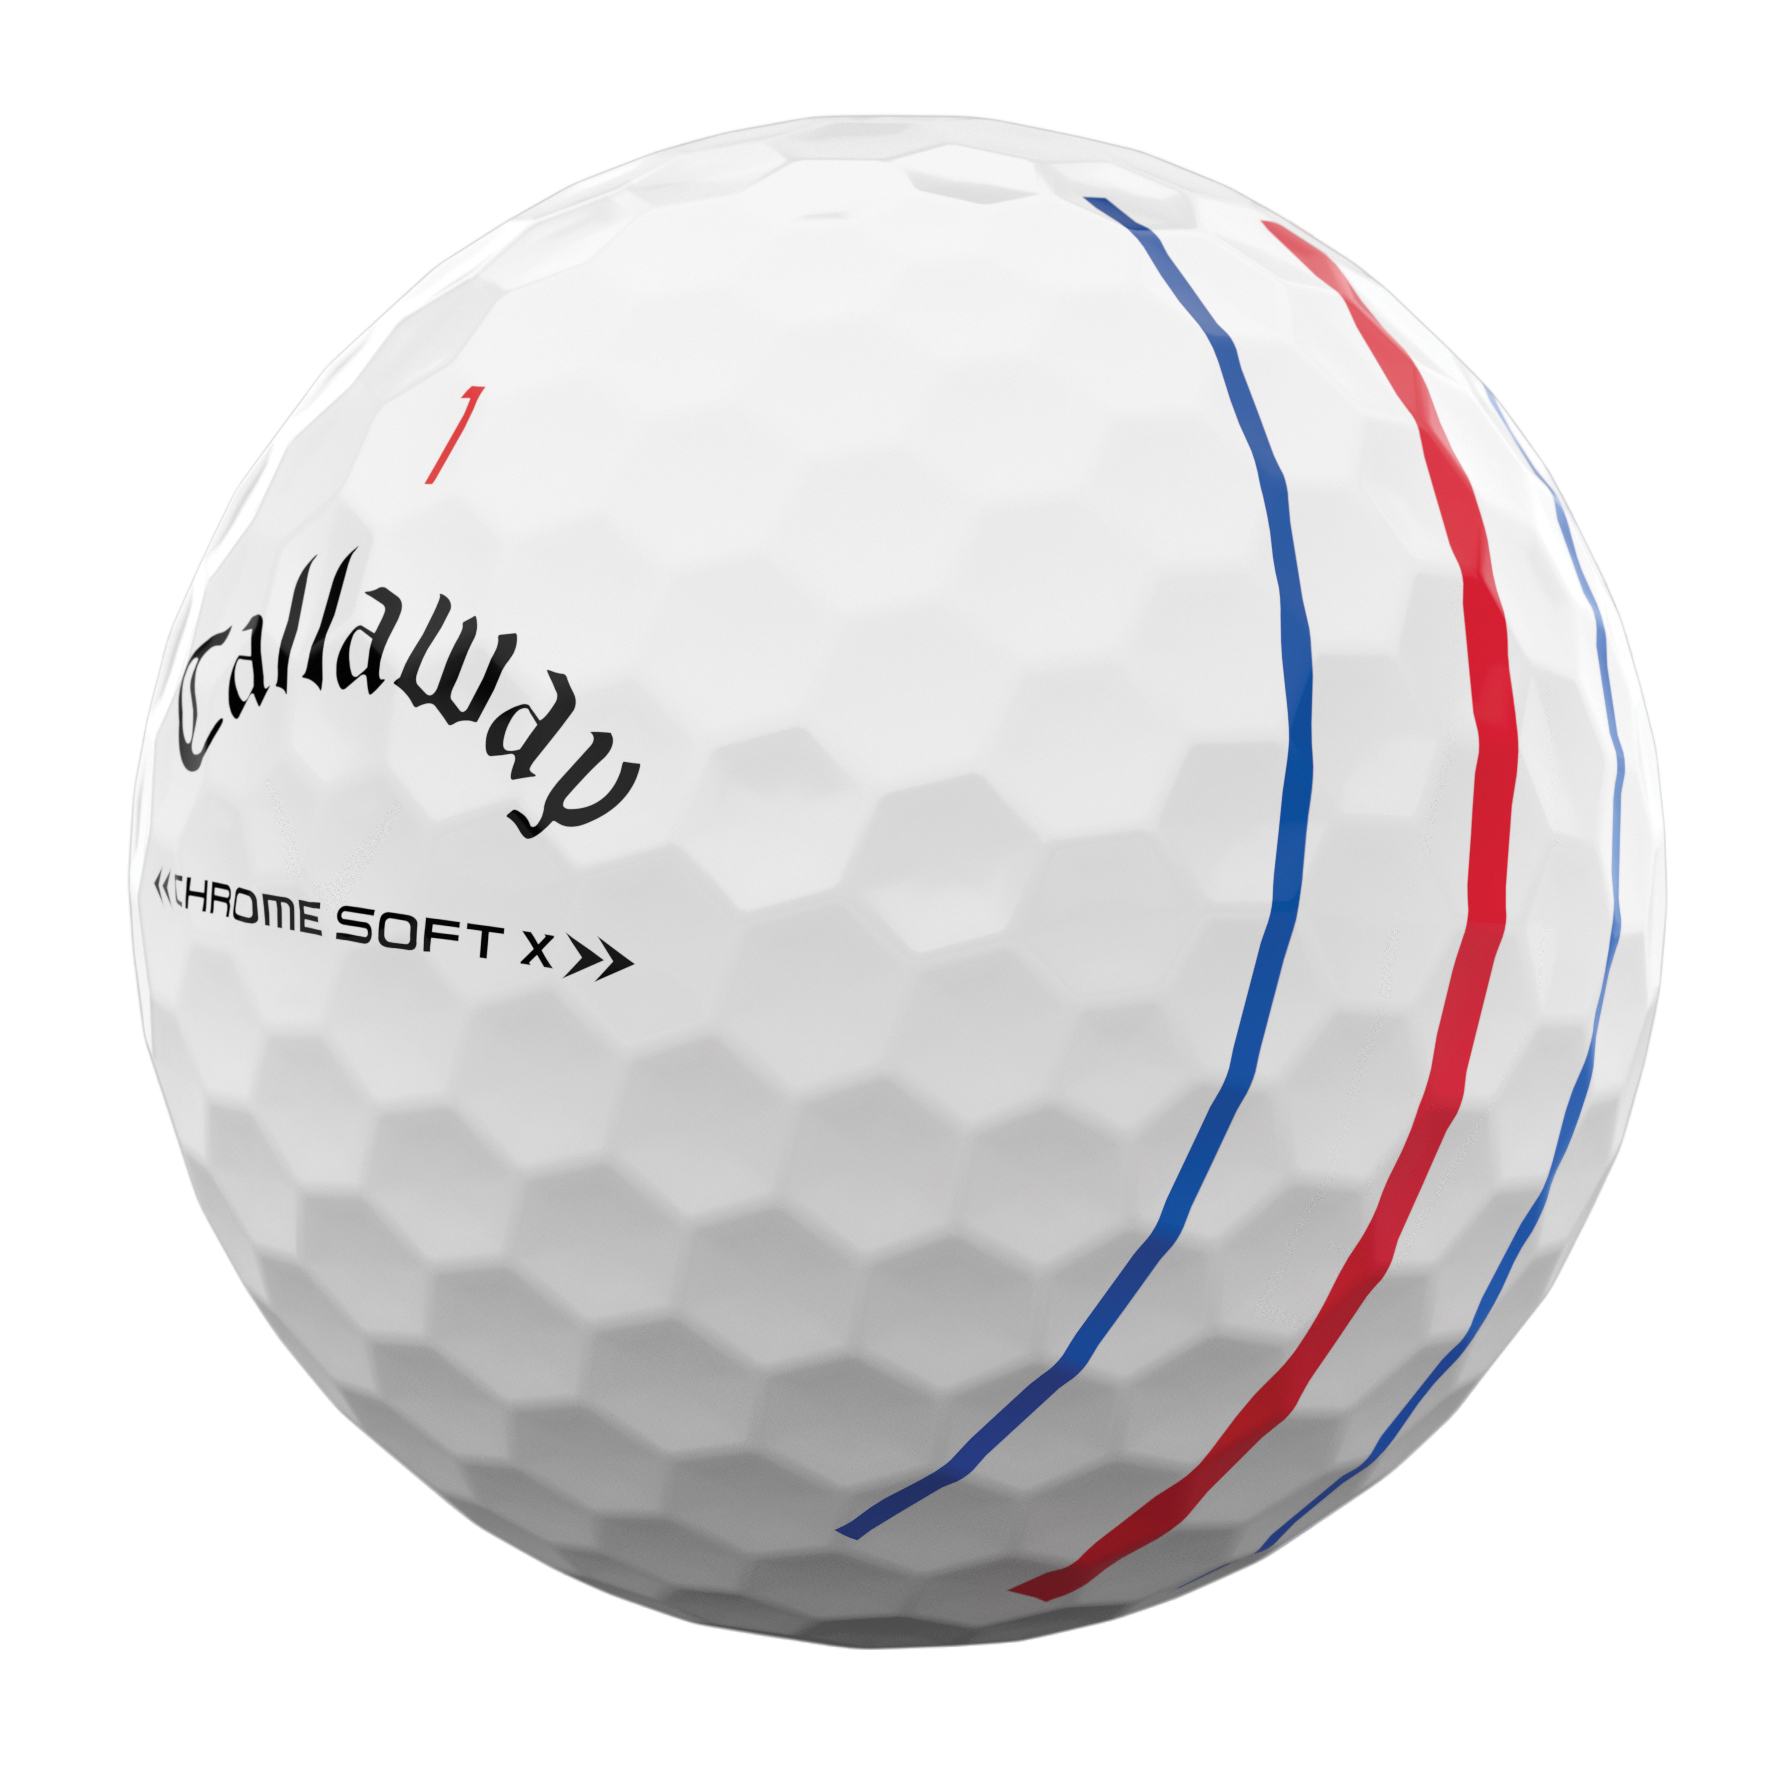 Chrome Soft X Triple Track 2022 Golf Balls